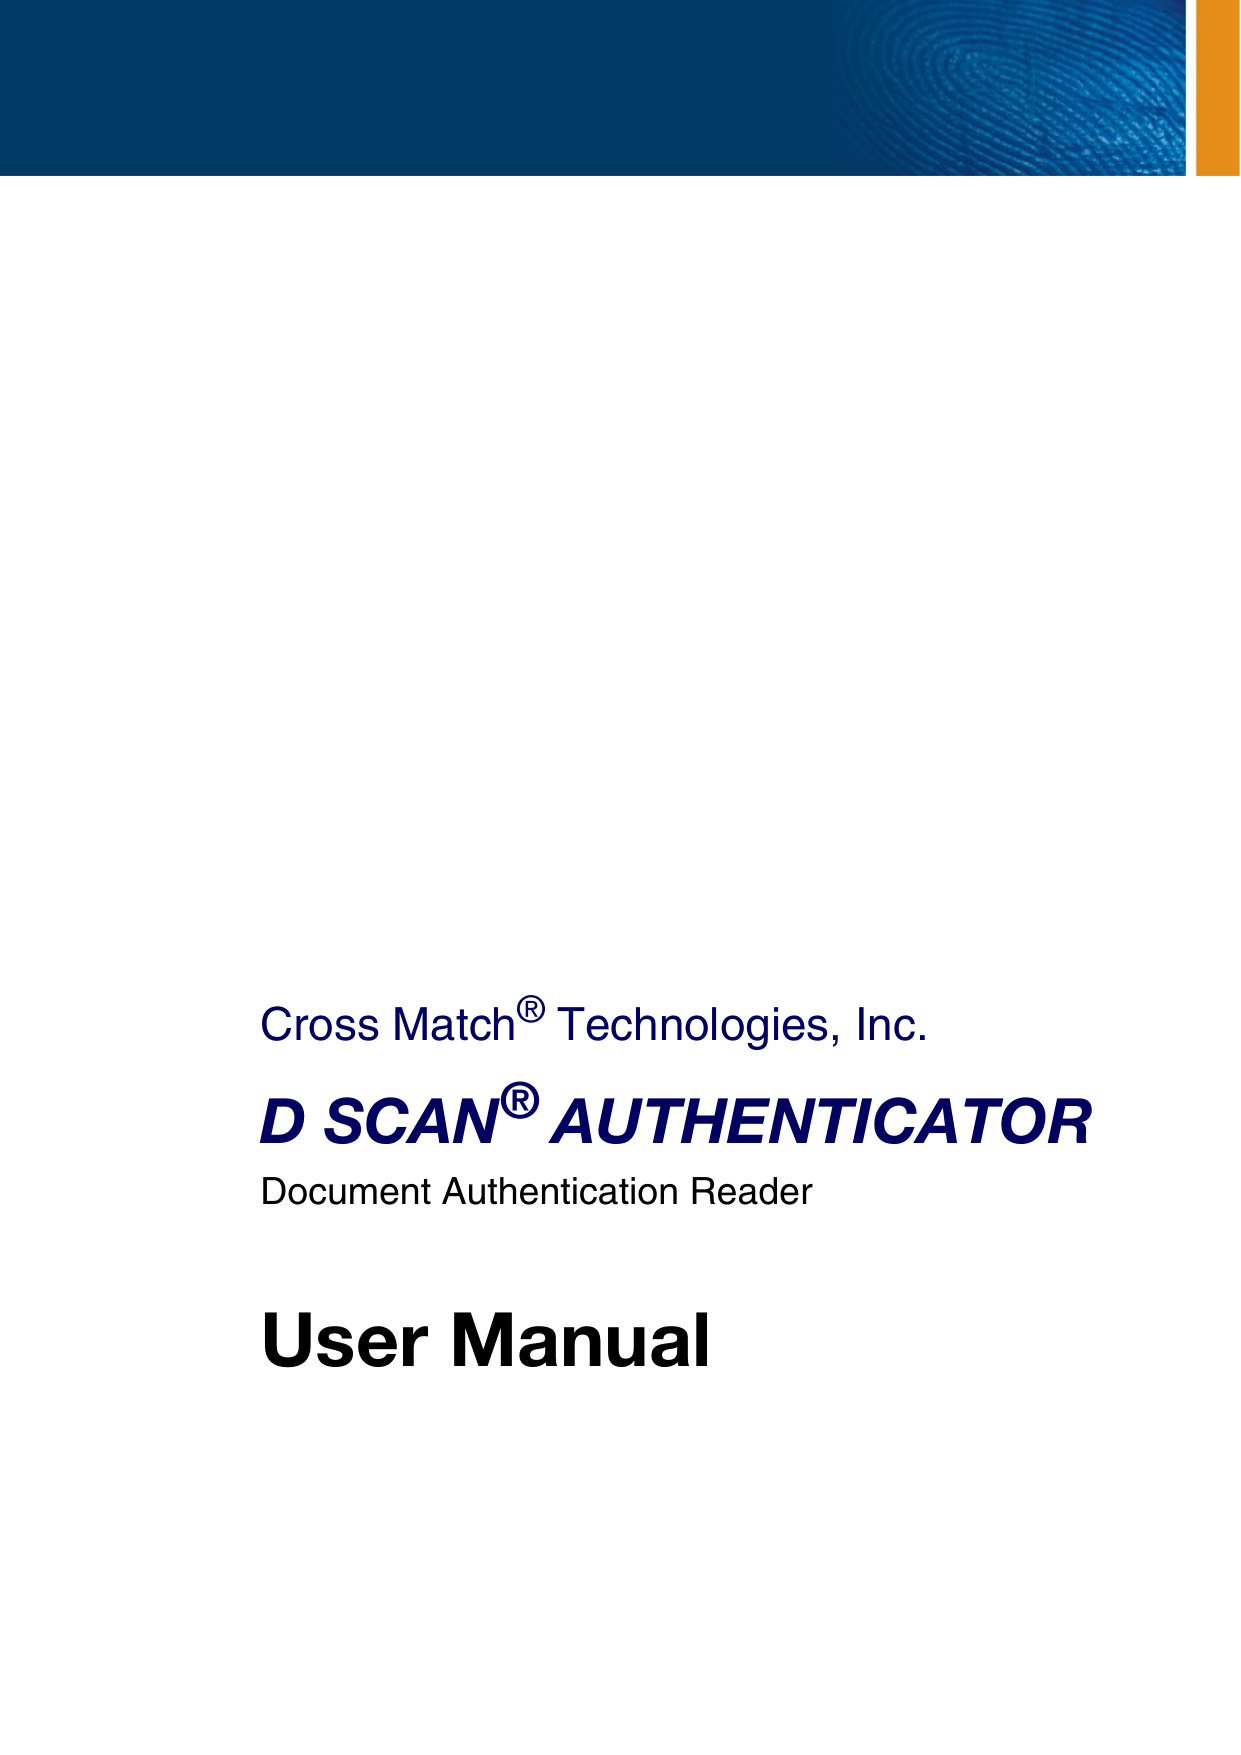 Cross Match® Technologies, Inc.D SCAN® AUTHENTICATOR Document Authentication ReaderUser Manual